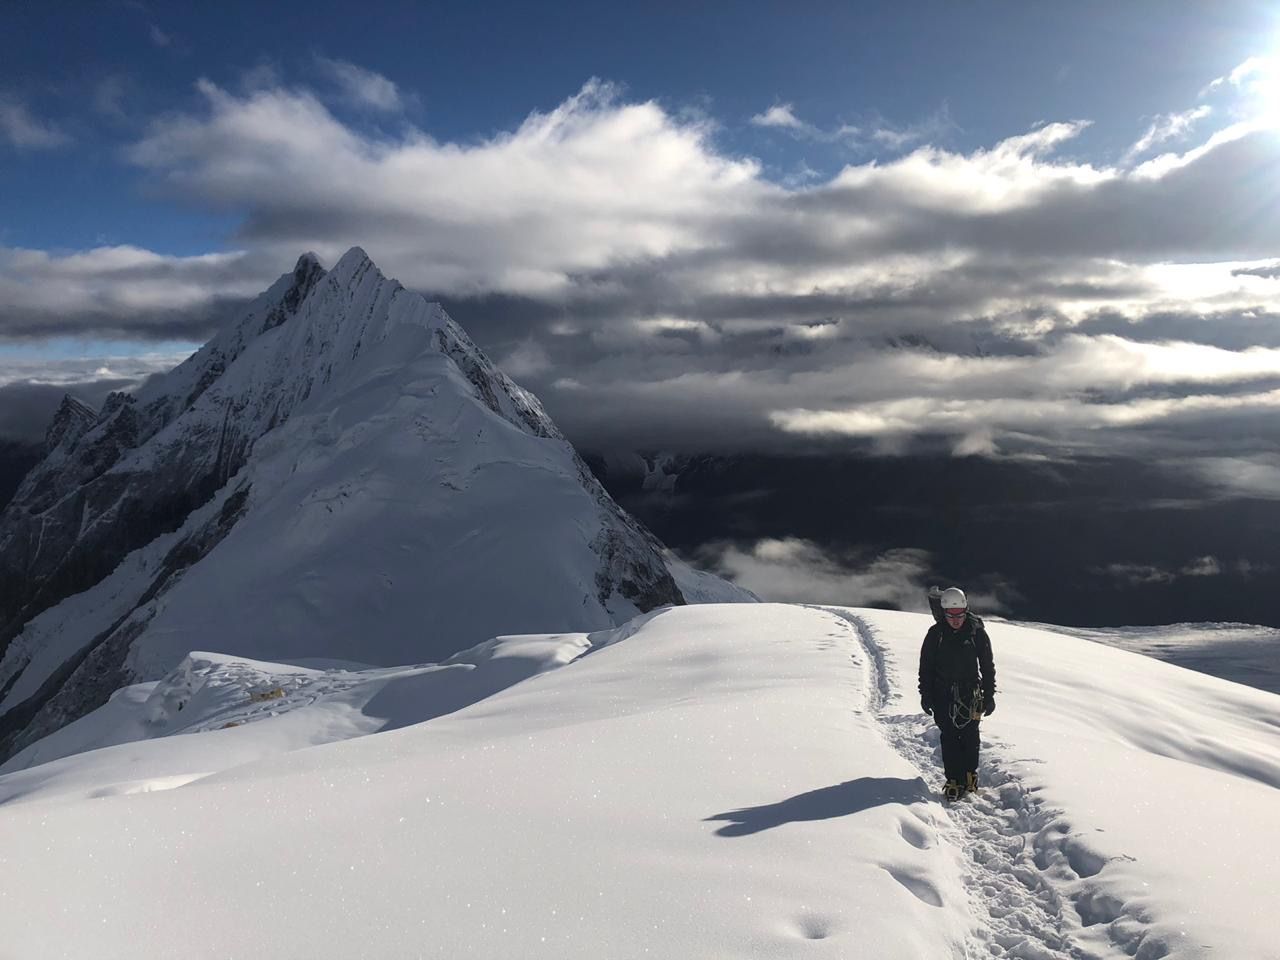 Jessica climbs Manaslu, an 8,163m-high mountain in Nepal. Photo: Jessica Hepburn.